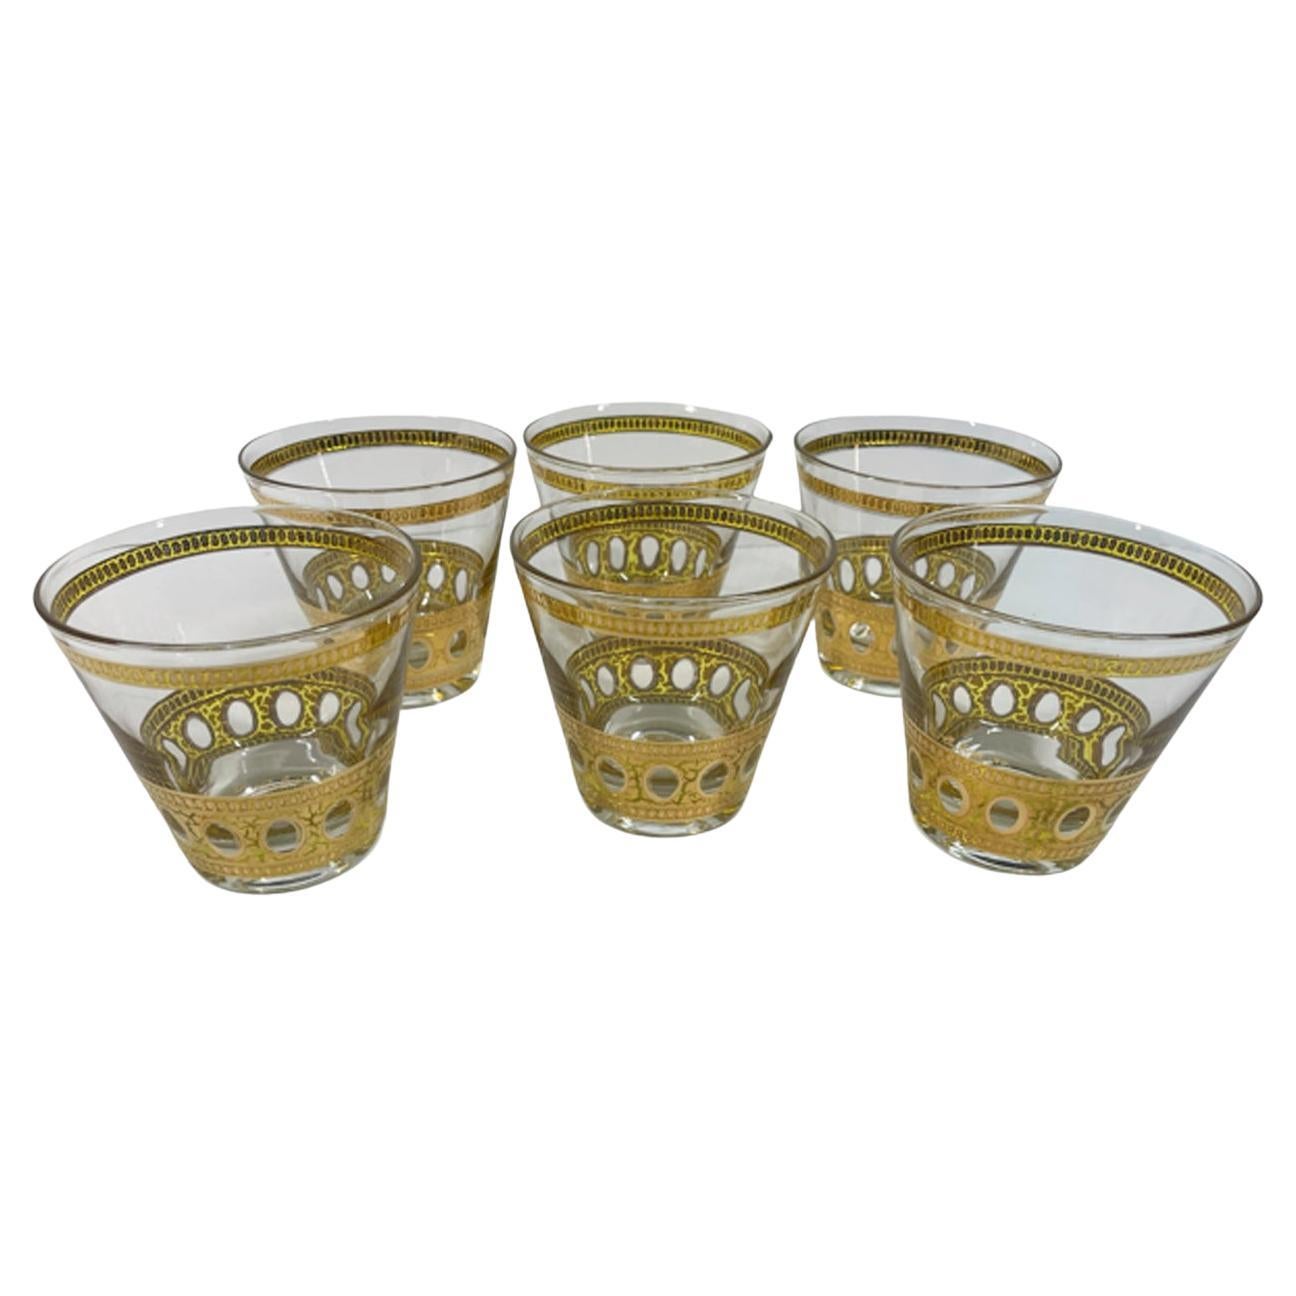 6 Vintage Culver LTD Old Fashioned Glasses in the 22 Karat Gold Antigua Pattern